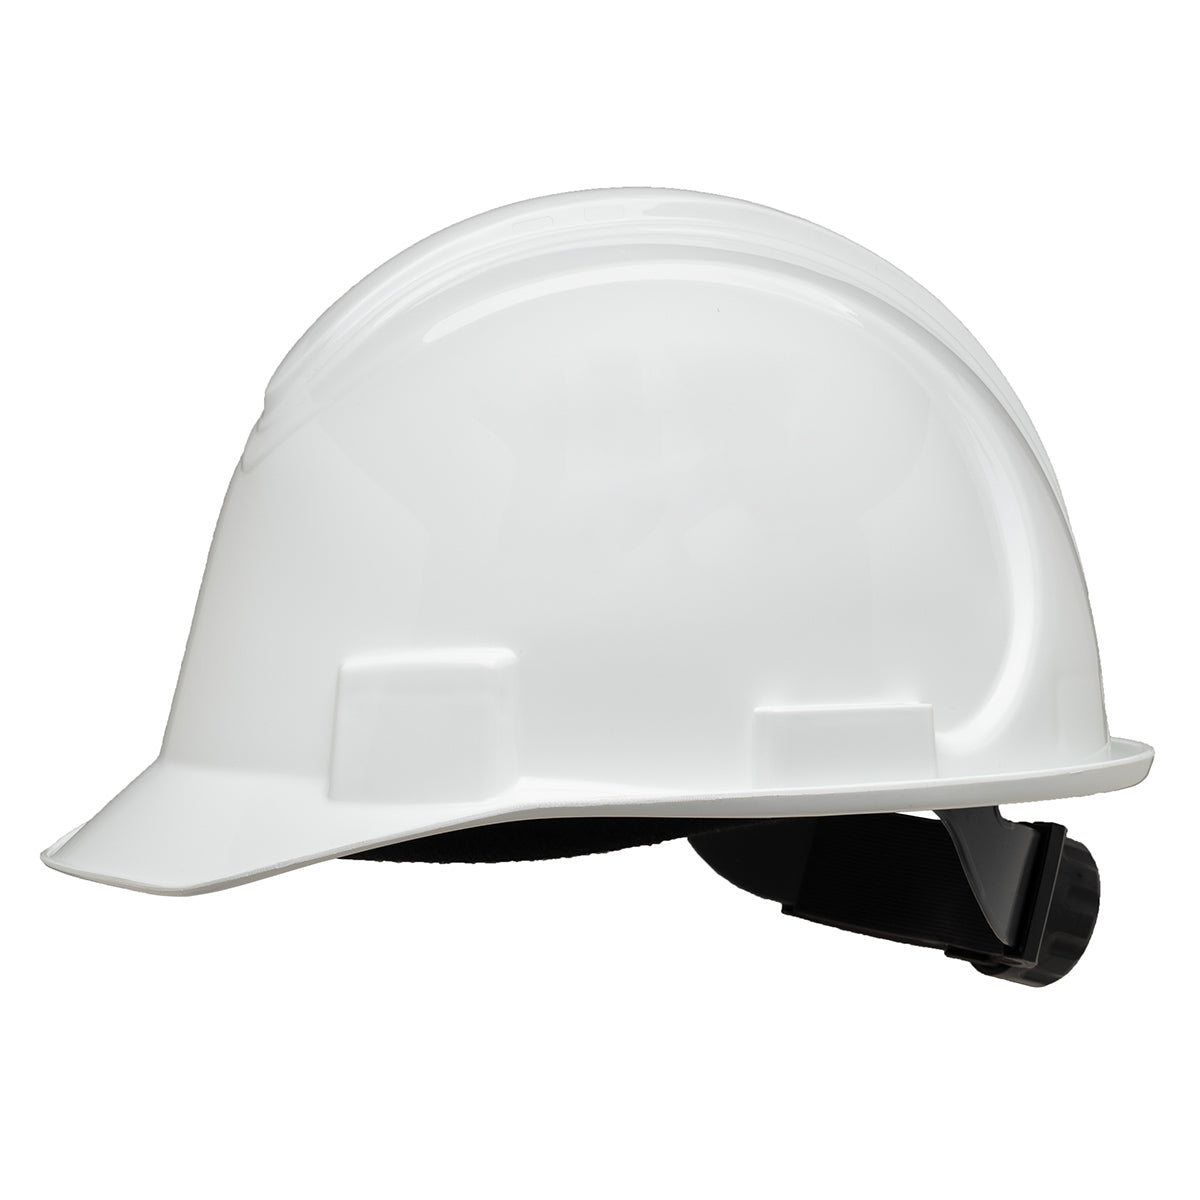 Honeywell North Short Brim Safety Helmet Non-Vented White